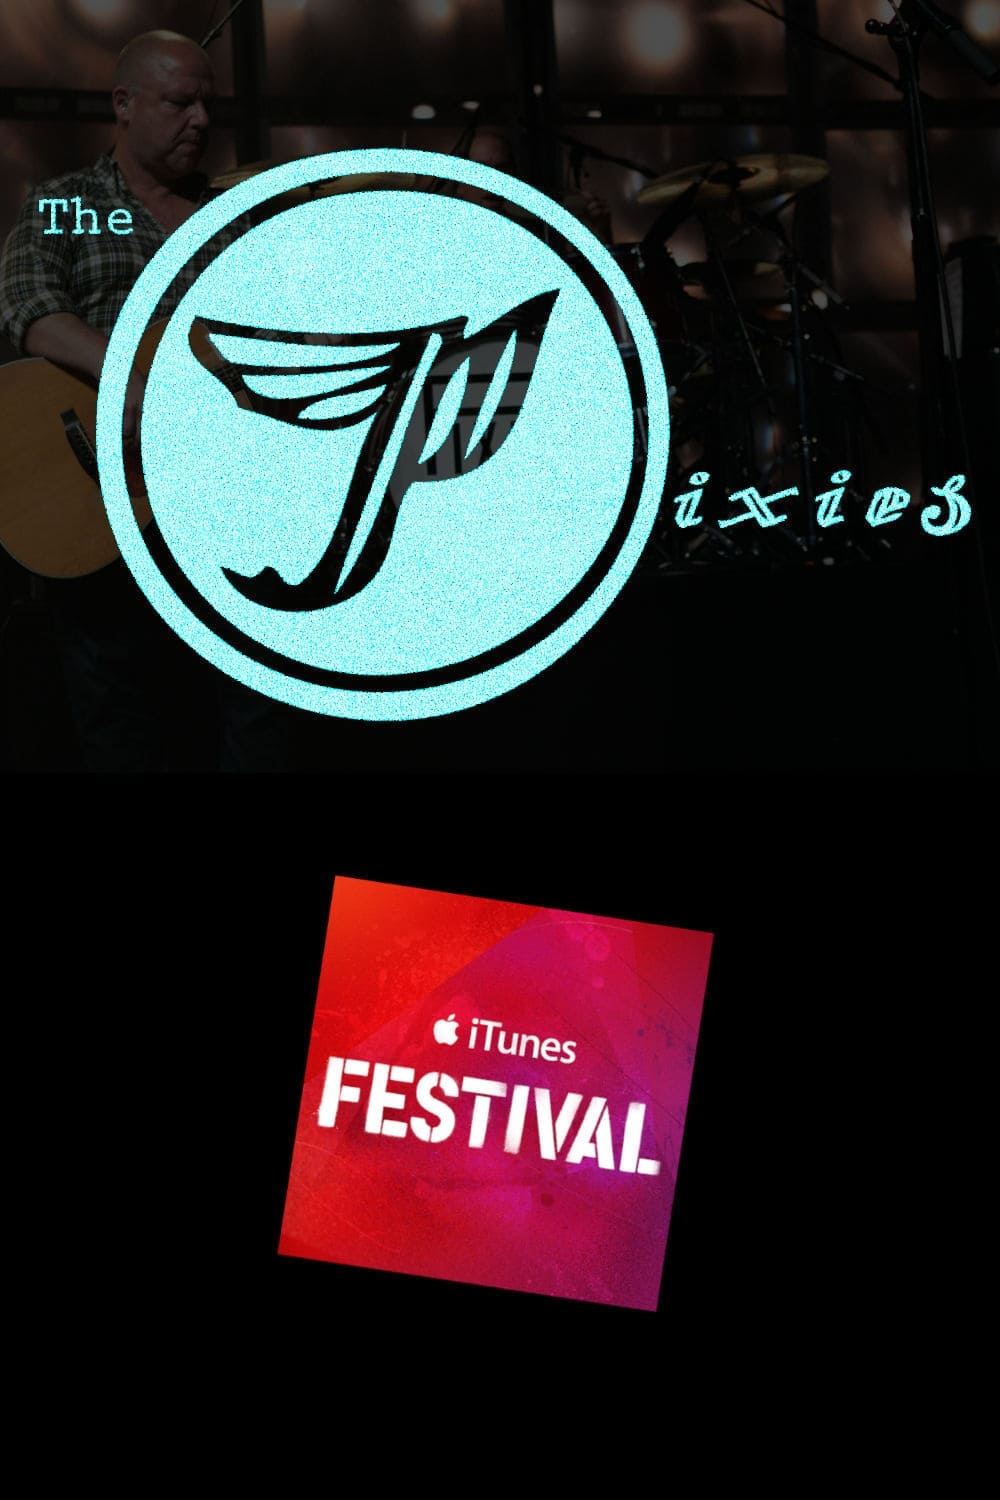 Pixies - Live at iTunes Festival